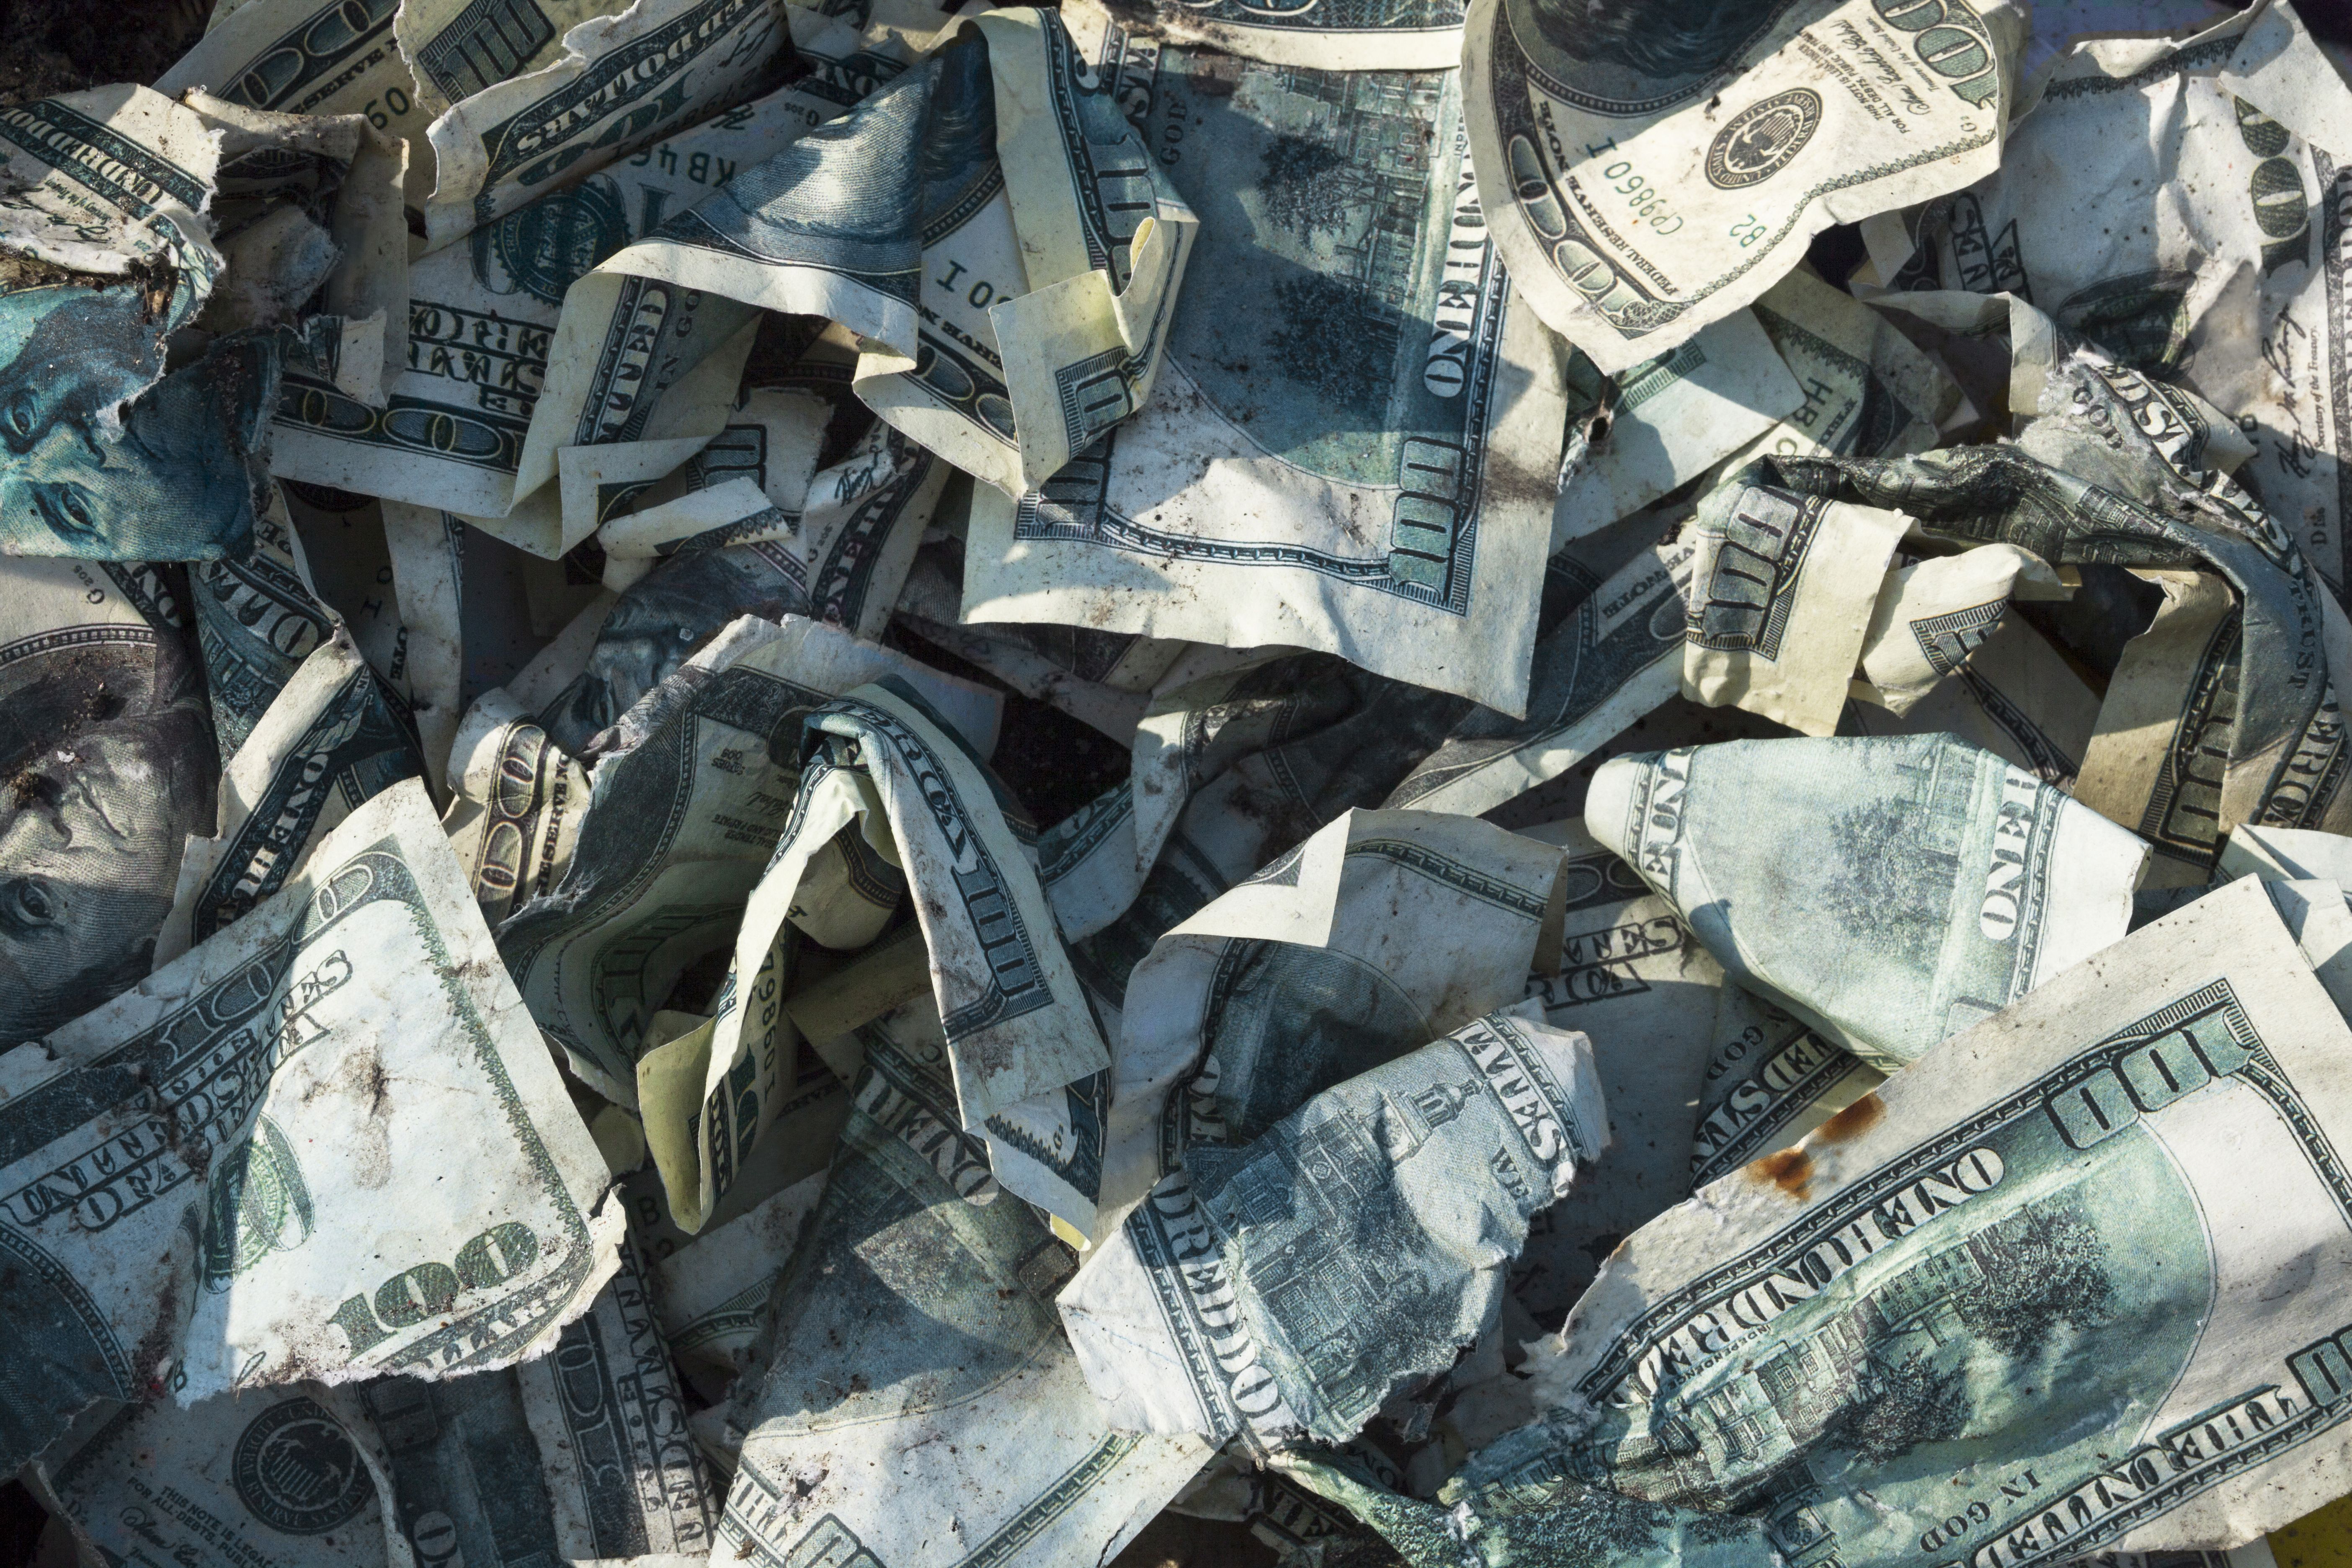 Crumpled up one hundred dollar bills. | Source: Shutterstock